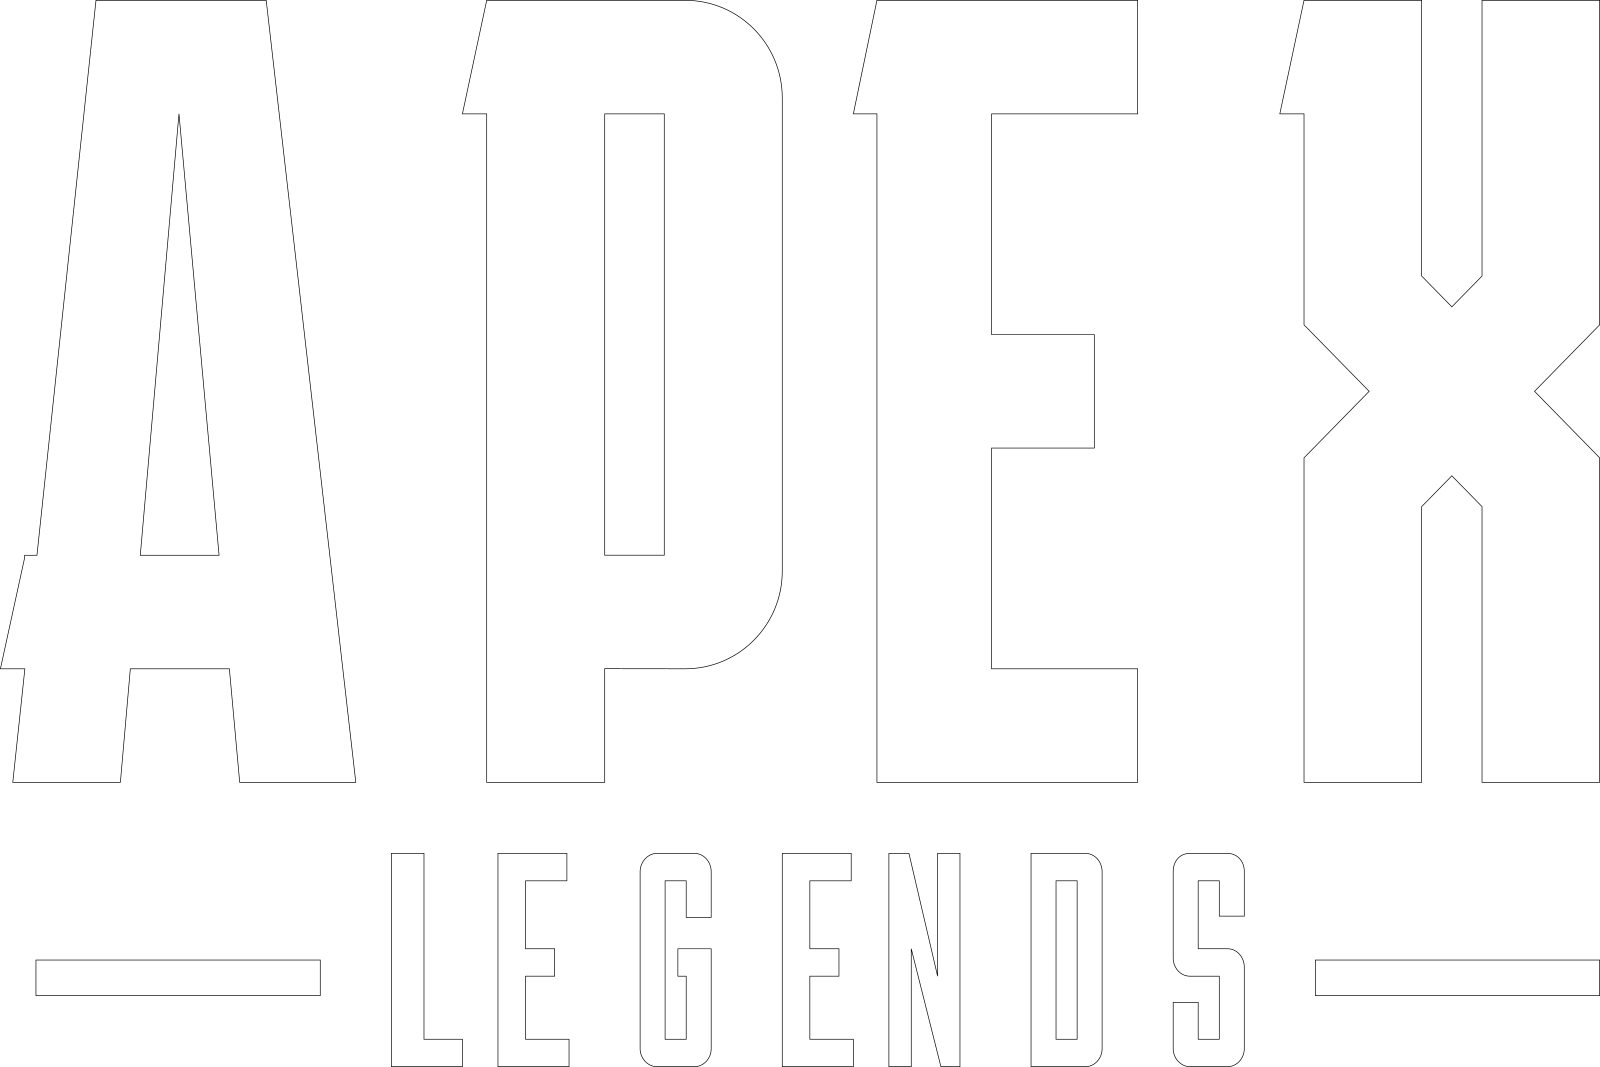 Apex Legends Logo.